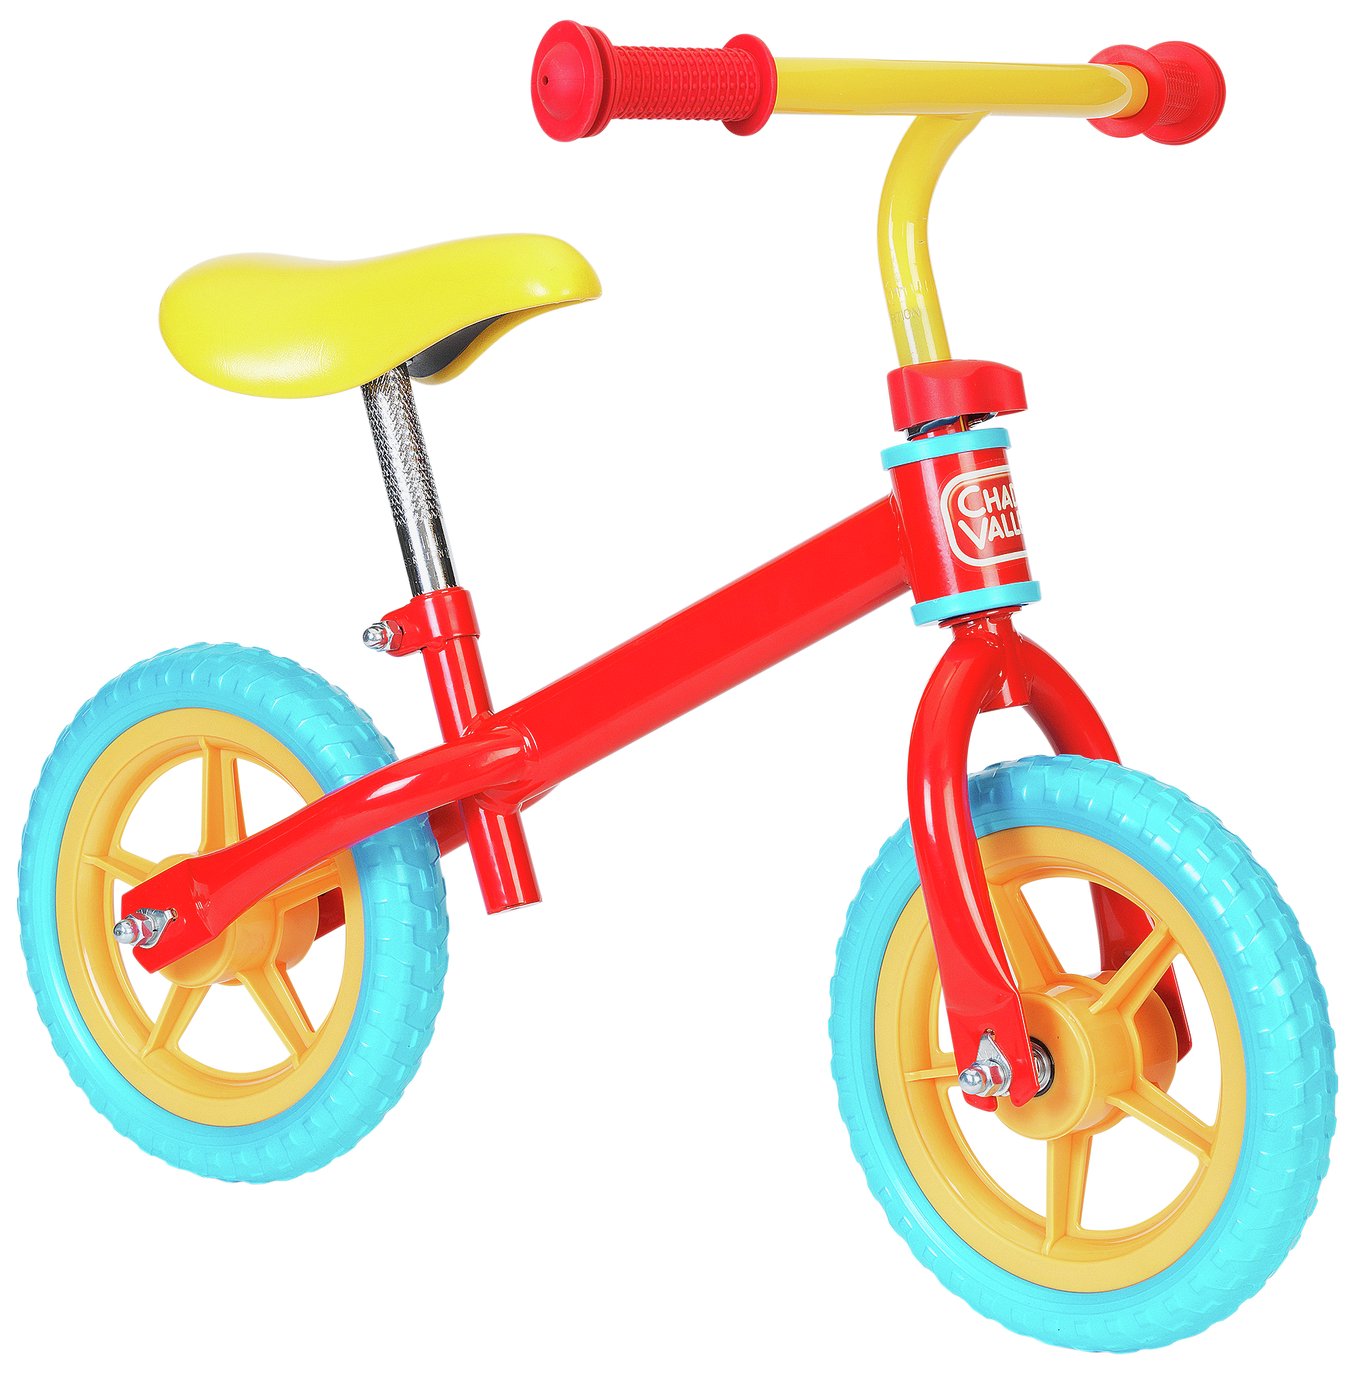 Chad Valley 10 inch Wheel Size Kids Balance Bike